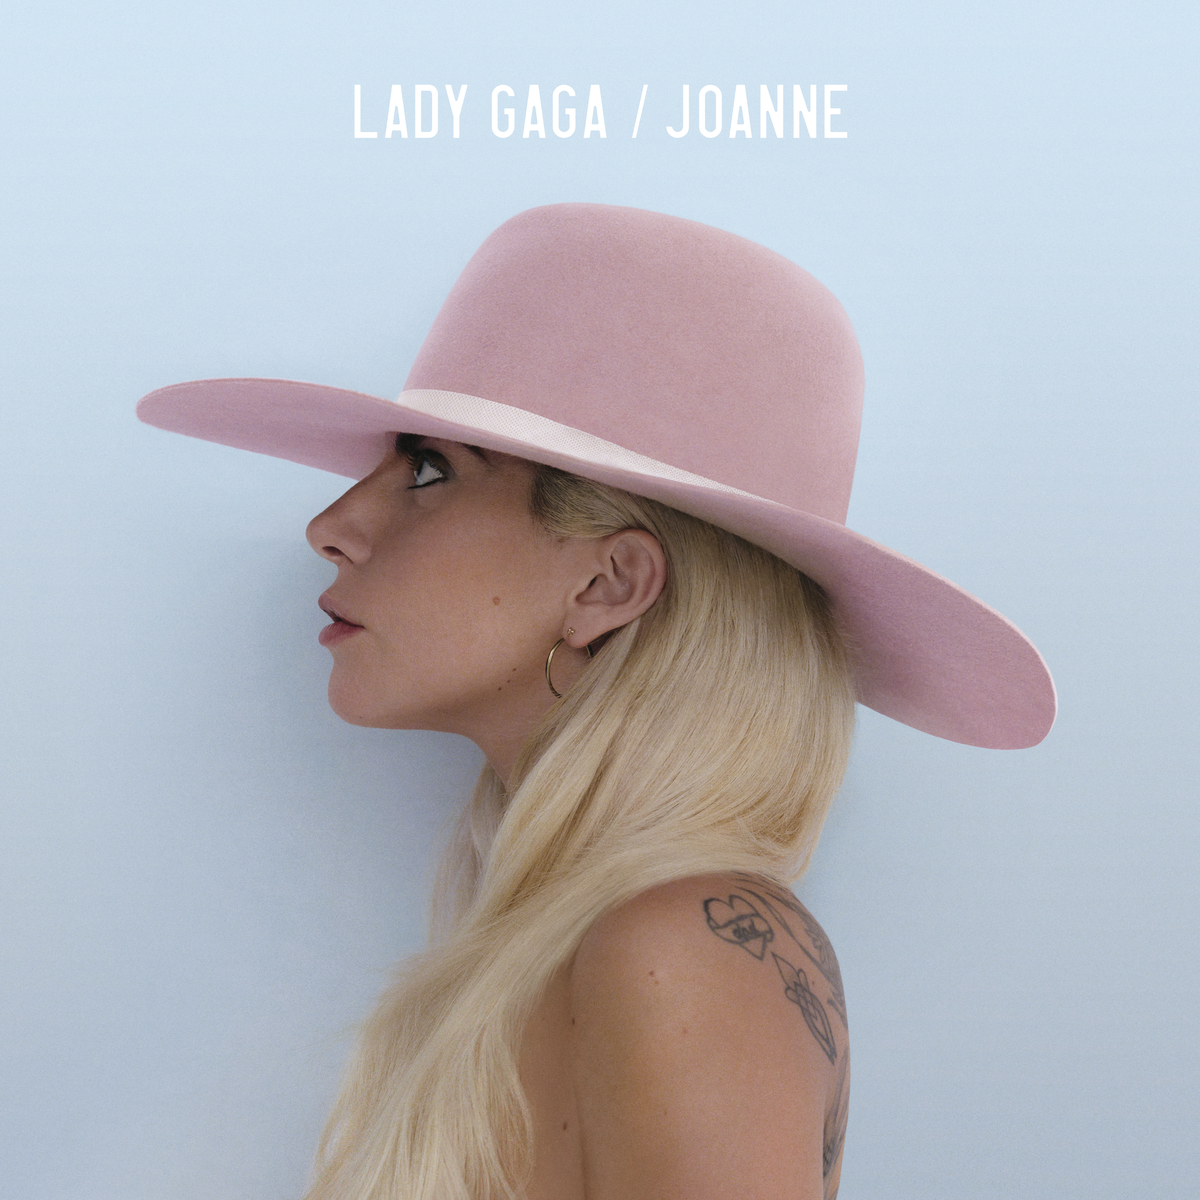 Joanne [Album]